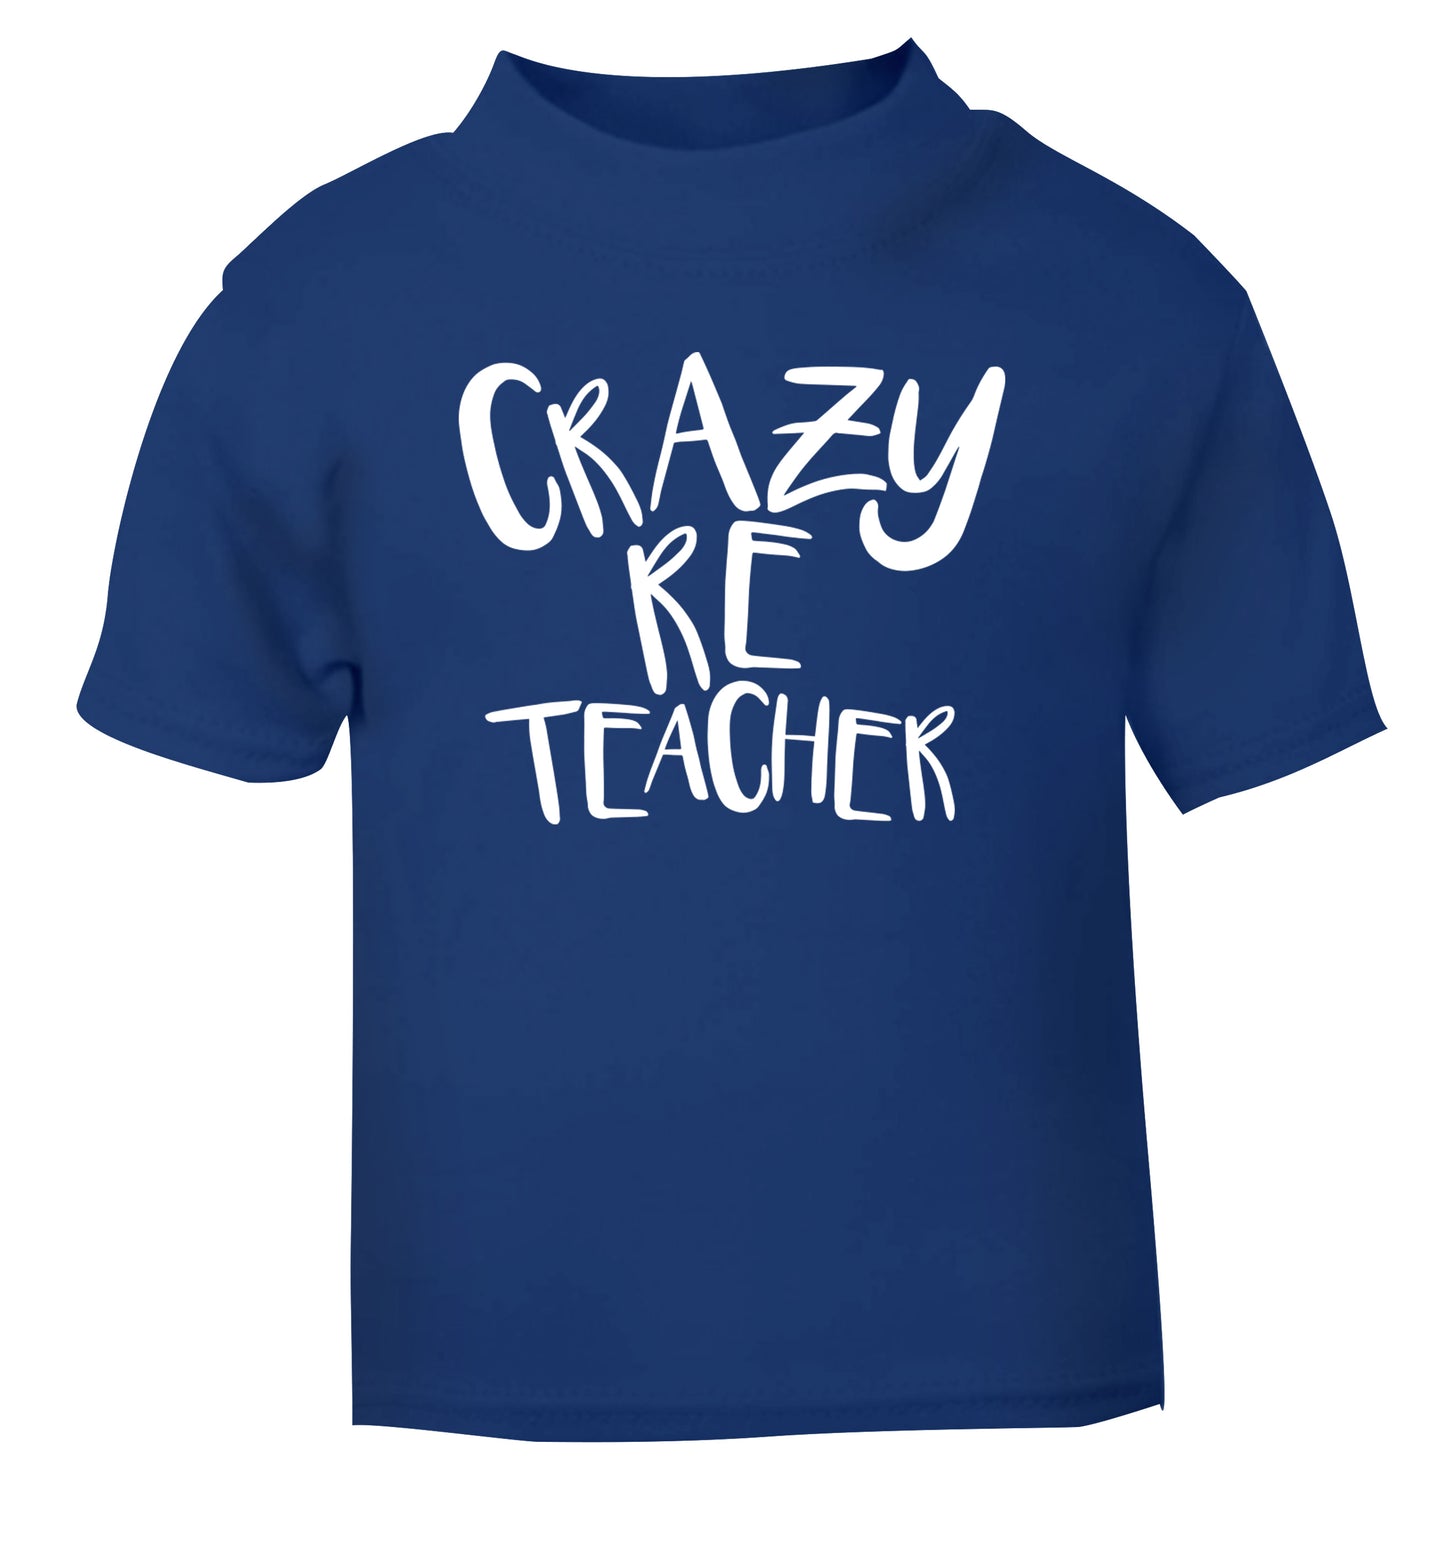 Crazy RE teacher blue Baby Toddler Tshirt 2 Years